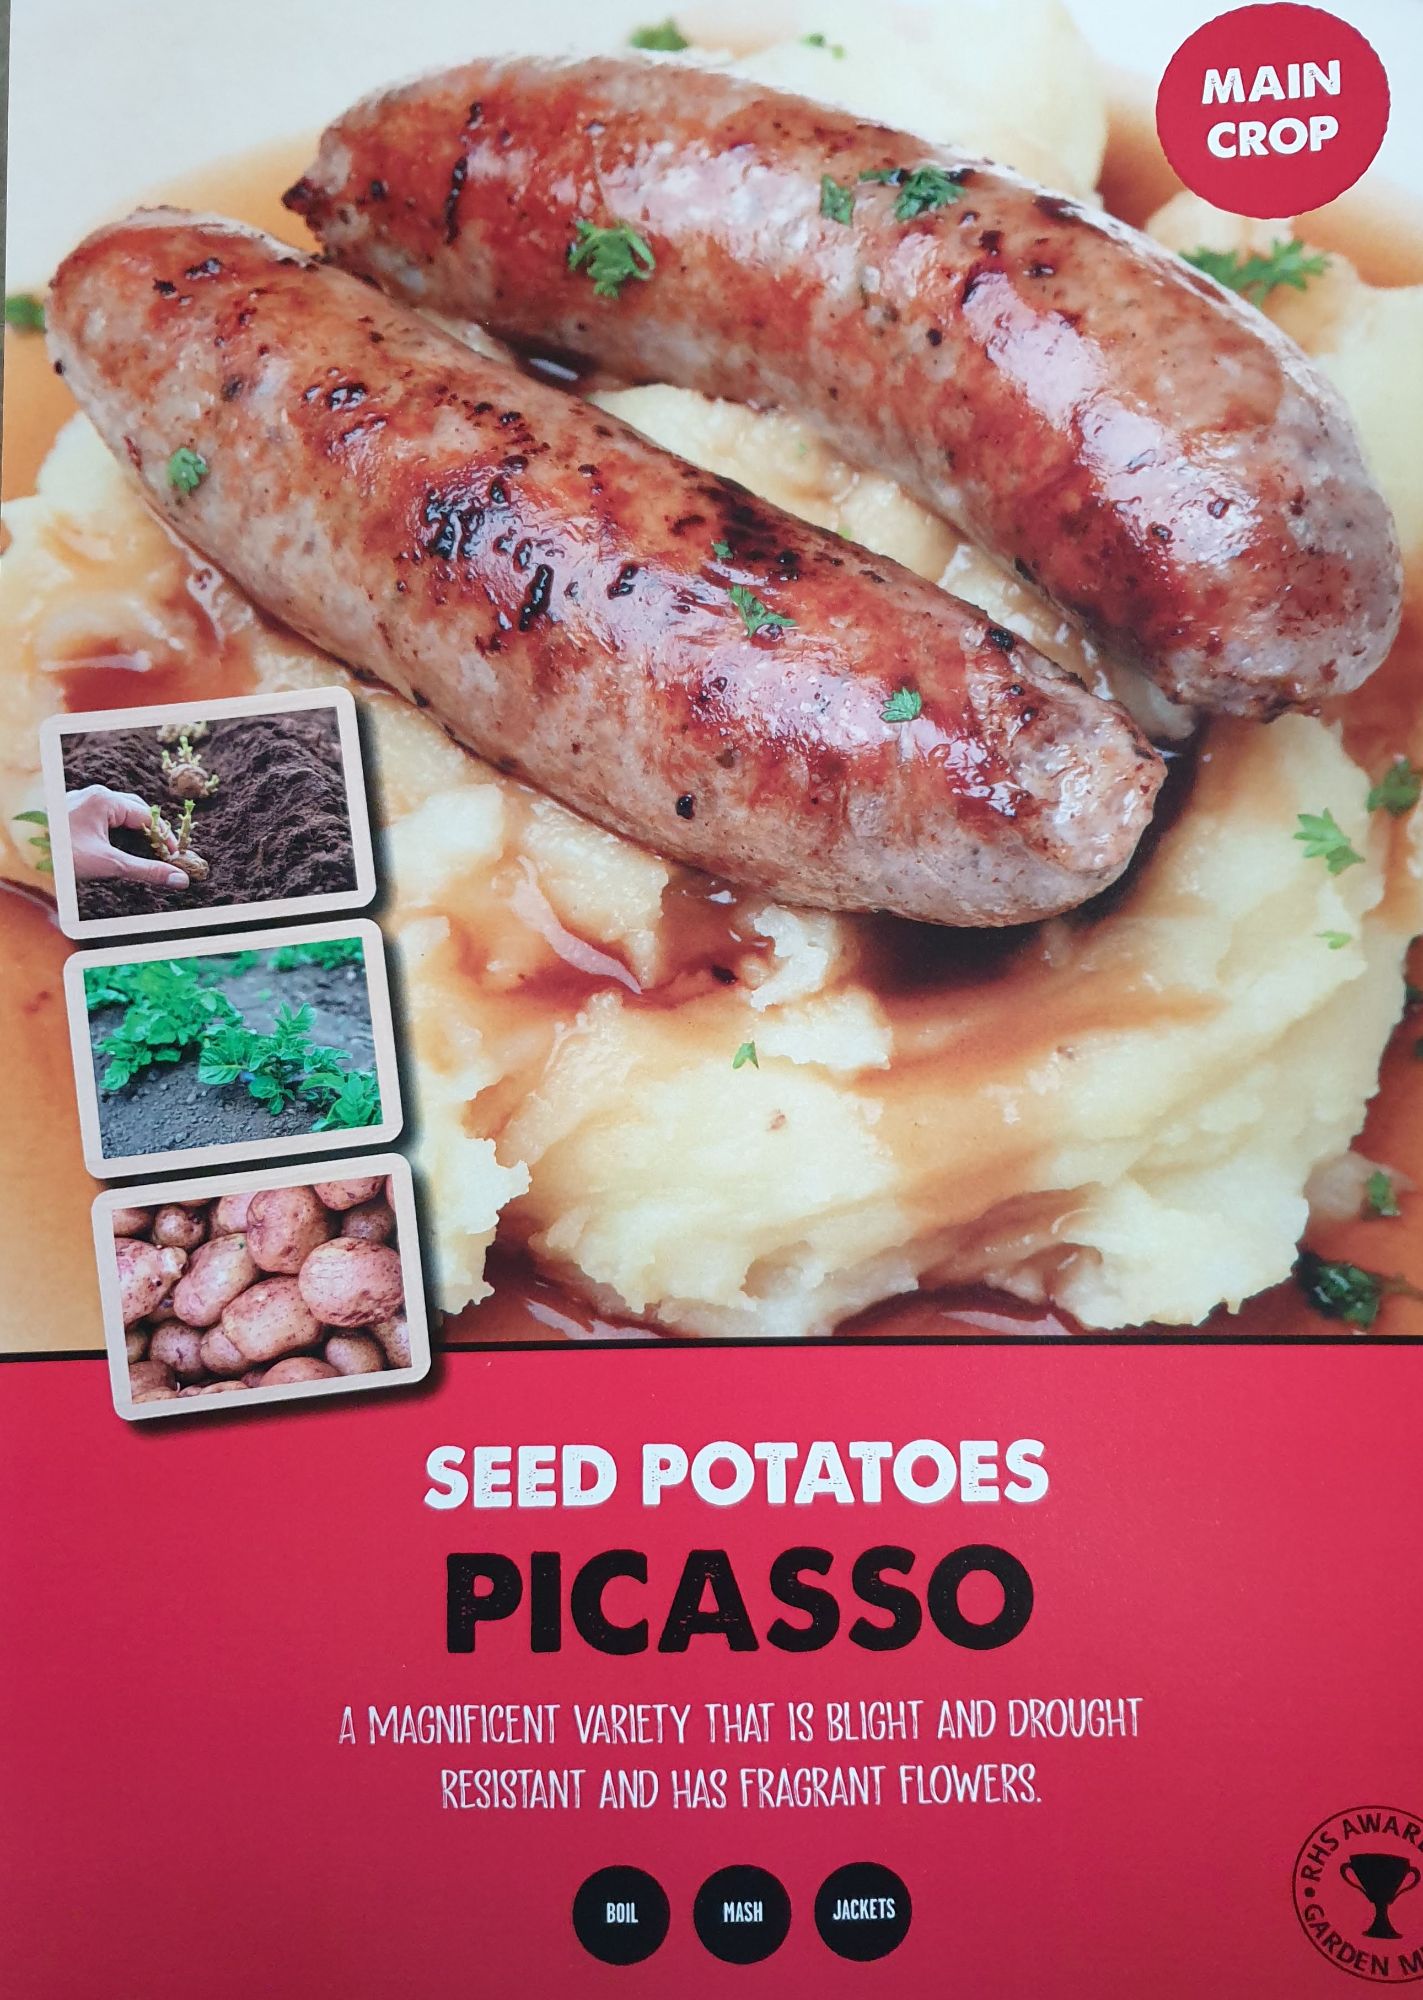 picasso_seed_potato_info.jpg